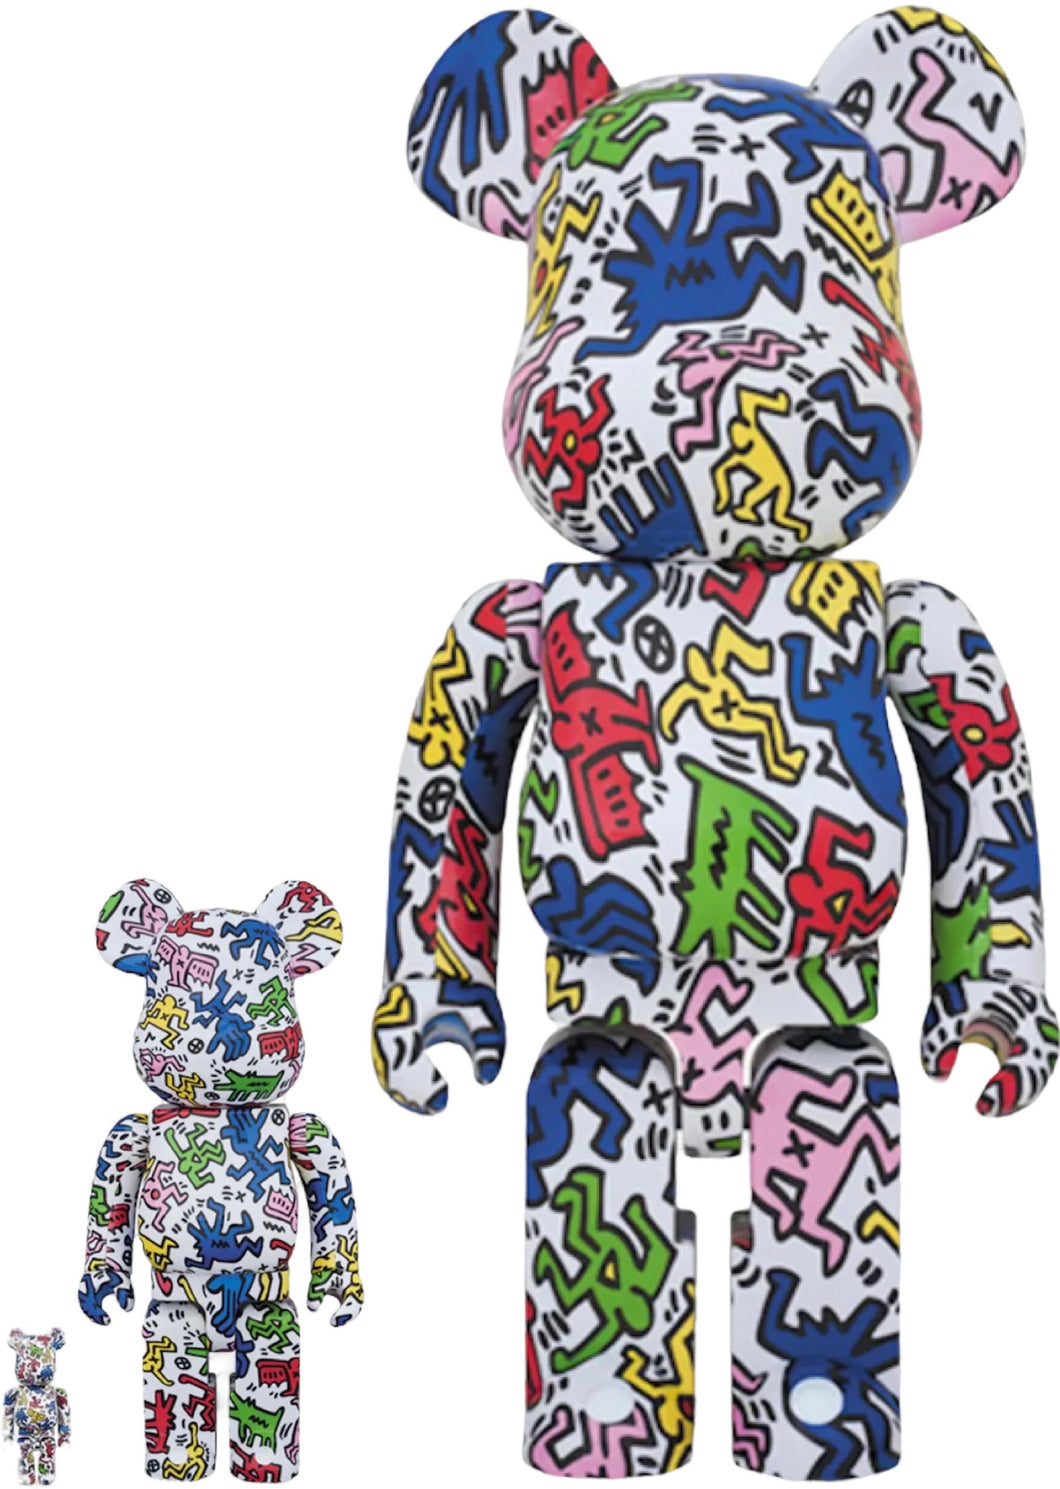 Bearbrick x Keith Haring #9